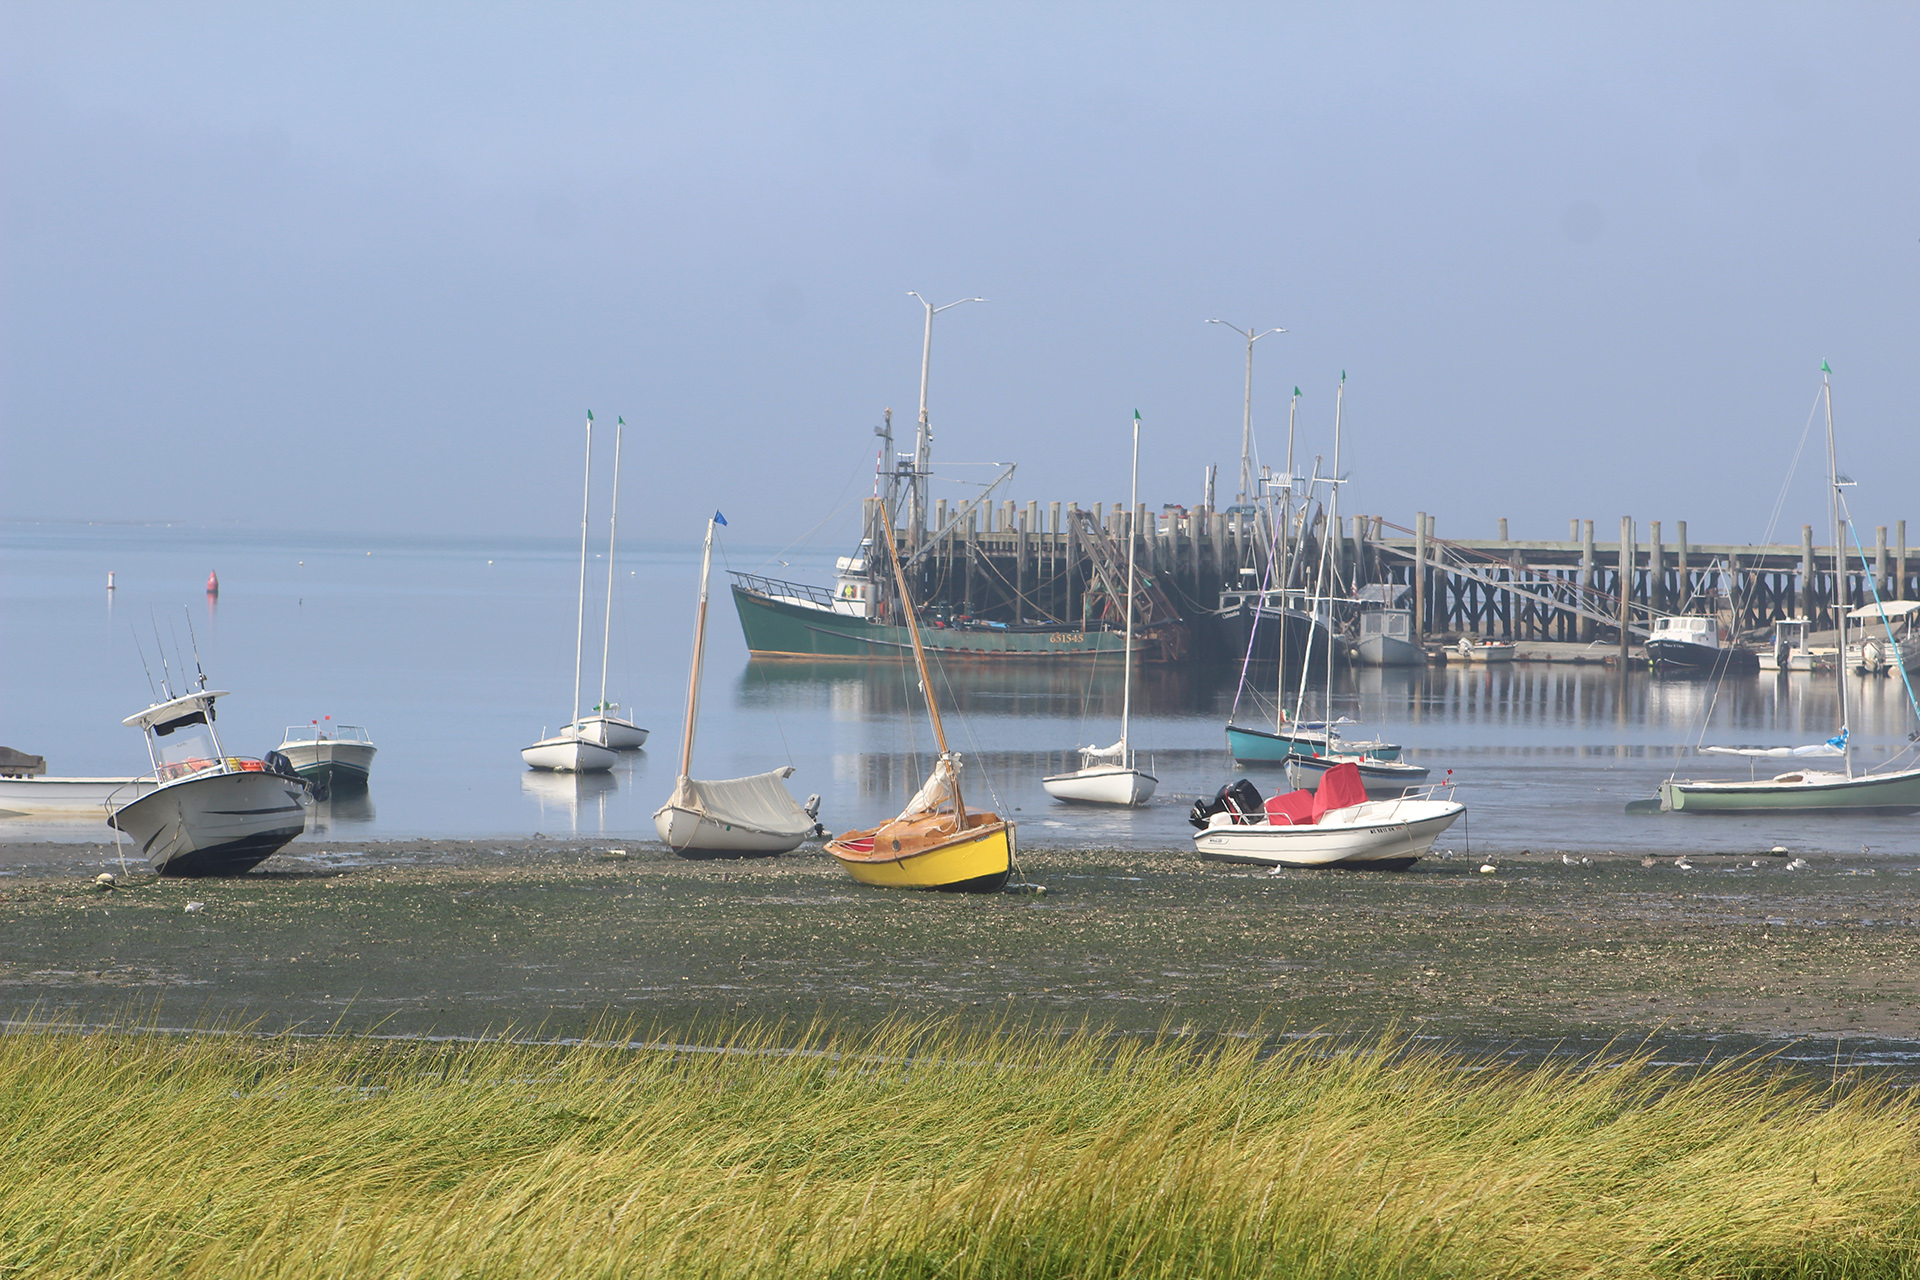 Boats in Wellfleet Harbor at low tide